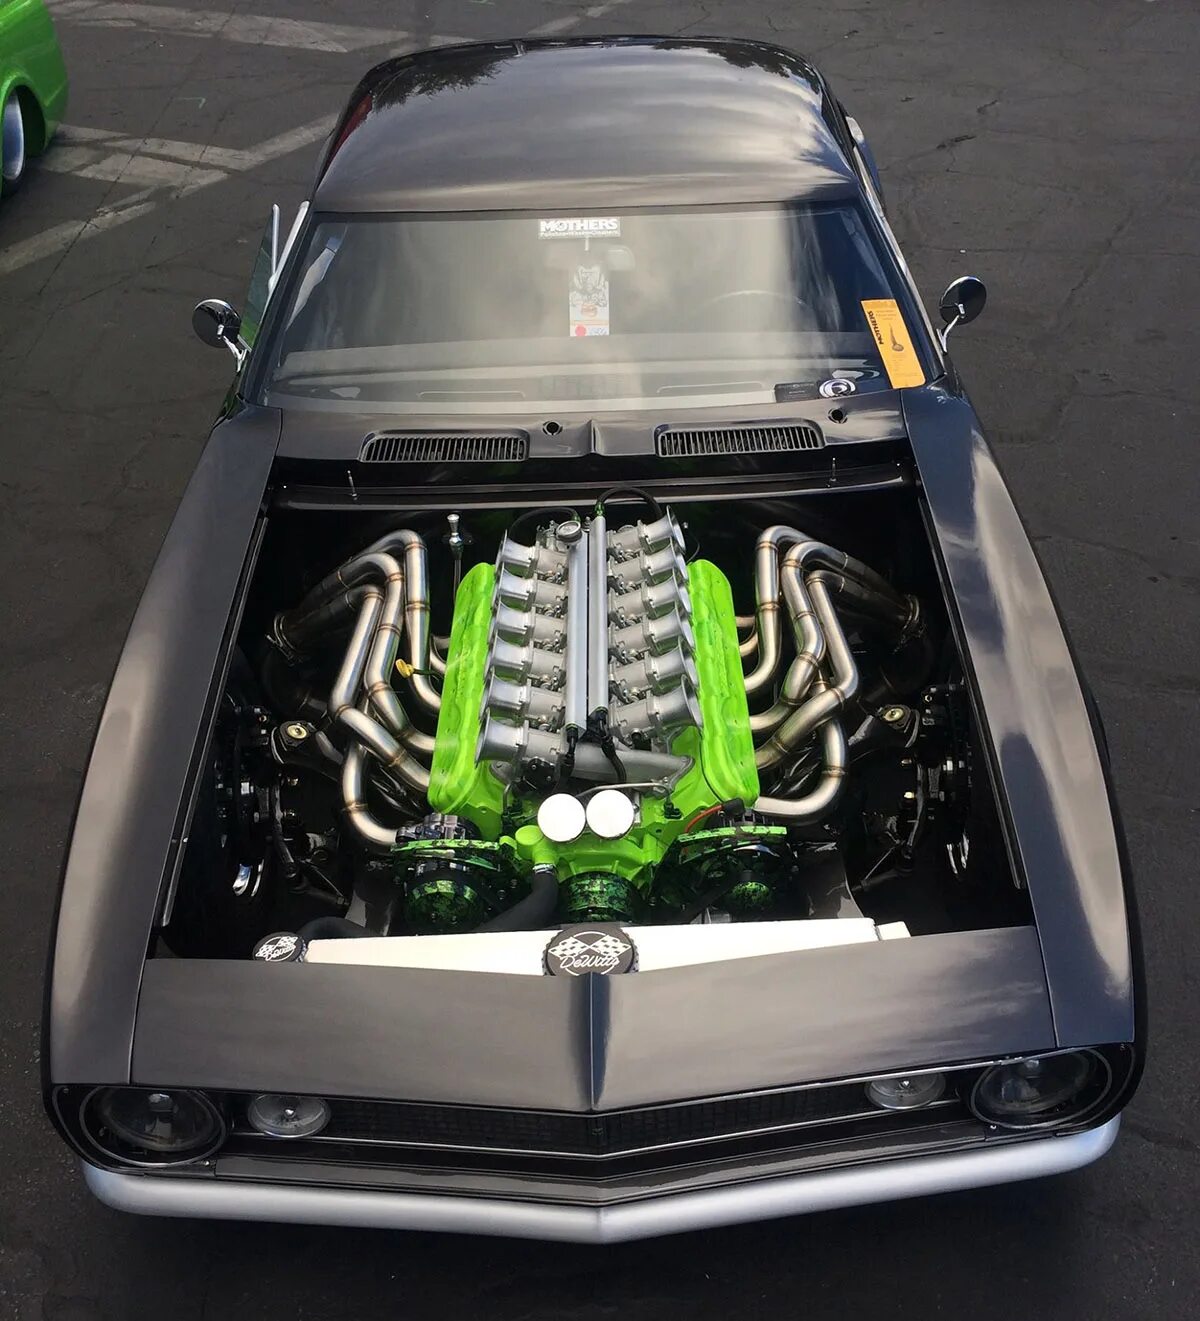 Двигатель v12 muscle car. V12 Twin Turbo с нагнетателем. Движок Челленджер v12. Dodge v12 engine.